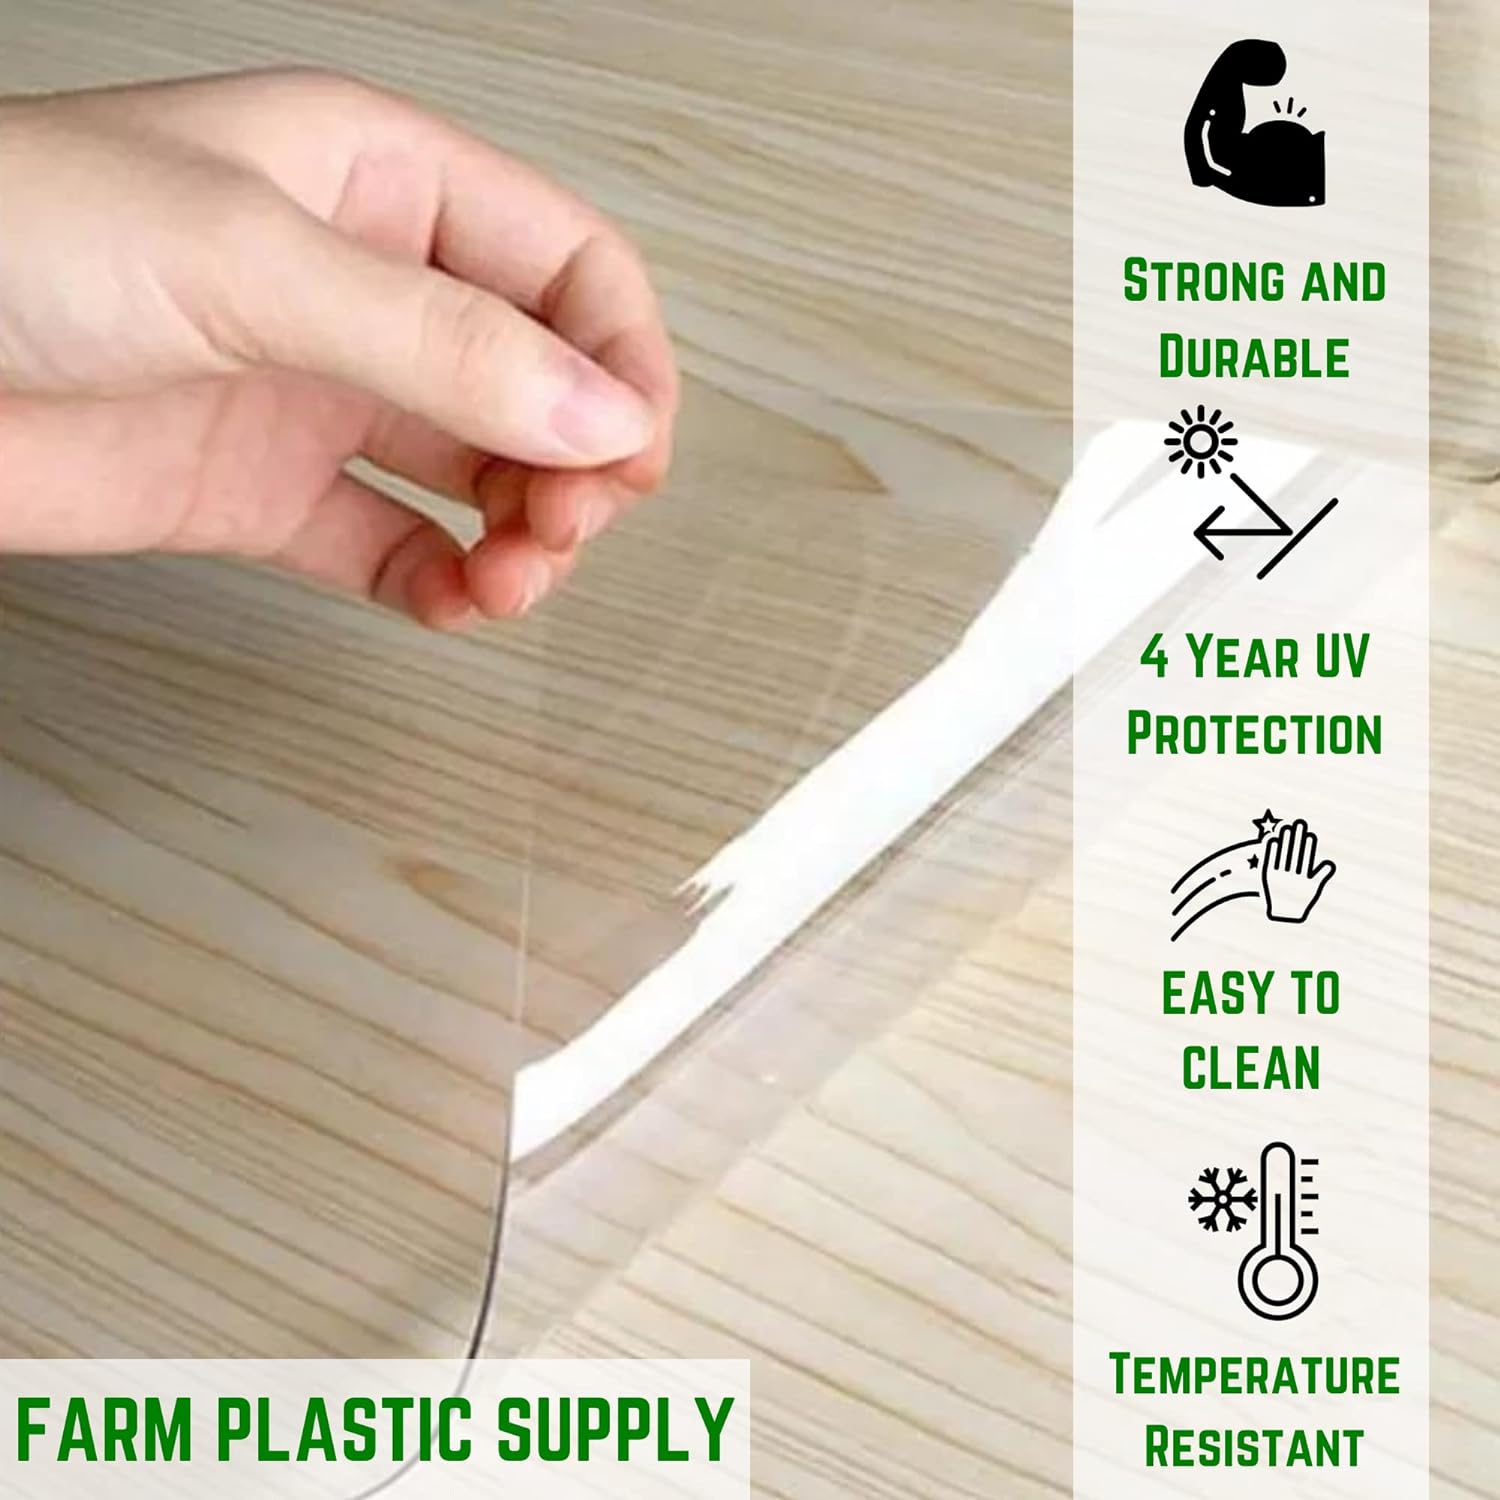 Farm Plastic Supply - Clear Vinyl Sheeting - 15 Mil - (4'6" x 3.5') - Vinyl Plastic Sheeting, Clear Vinyl Sheet for Storm Windows, Covering, P